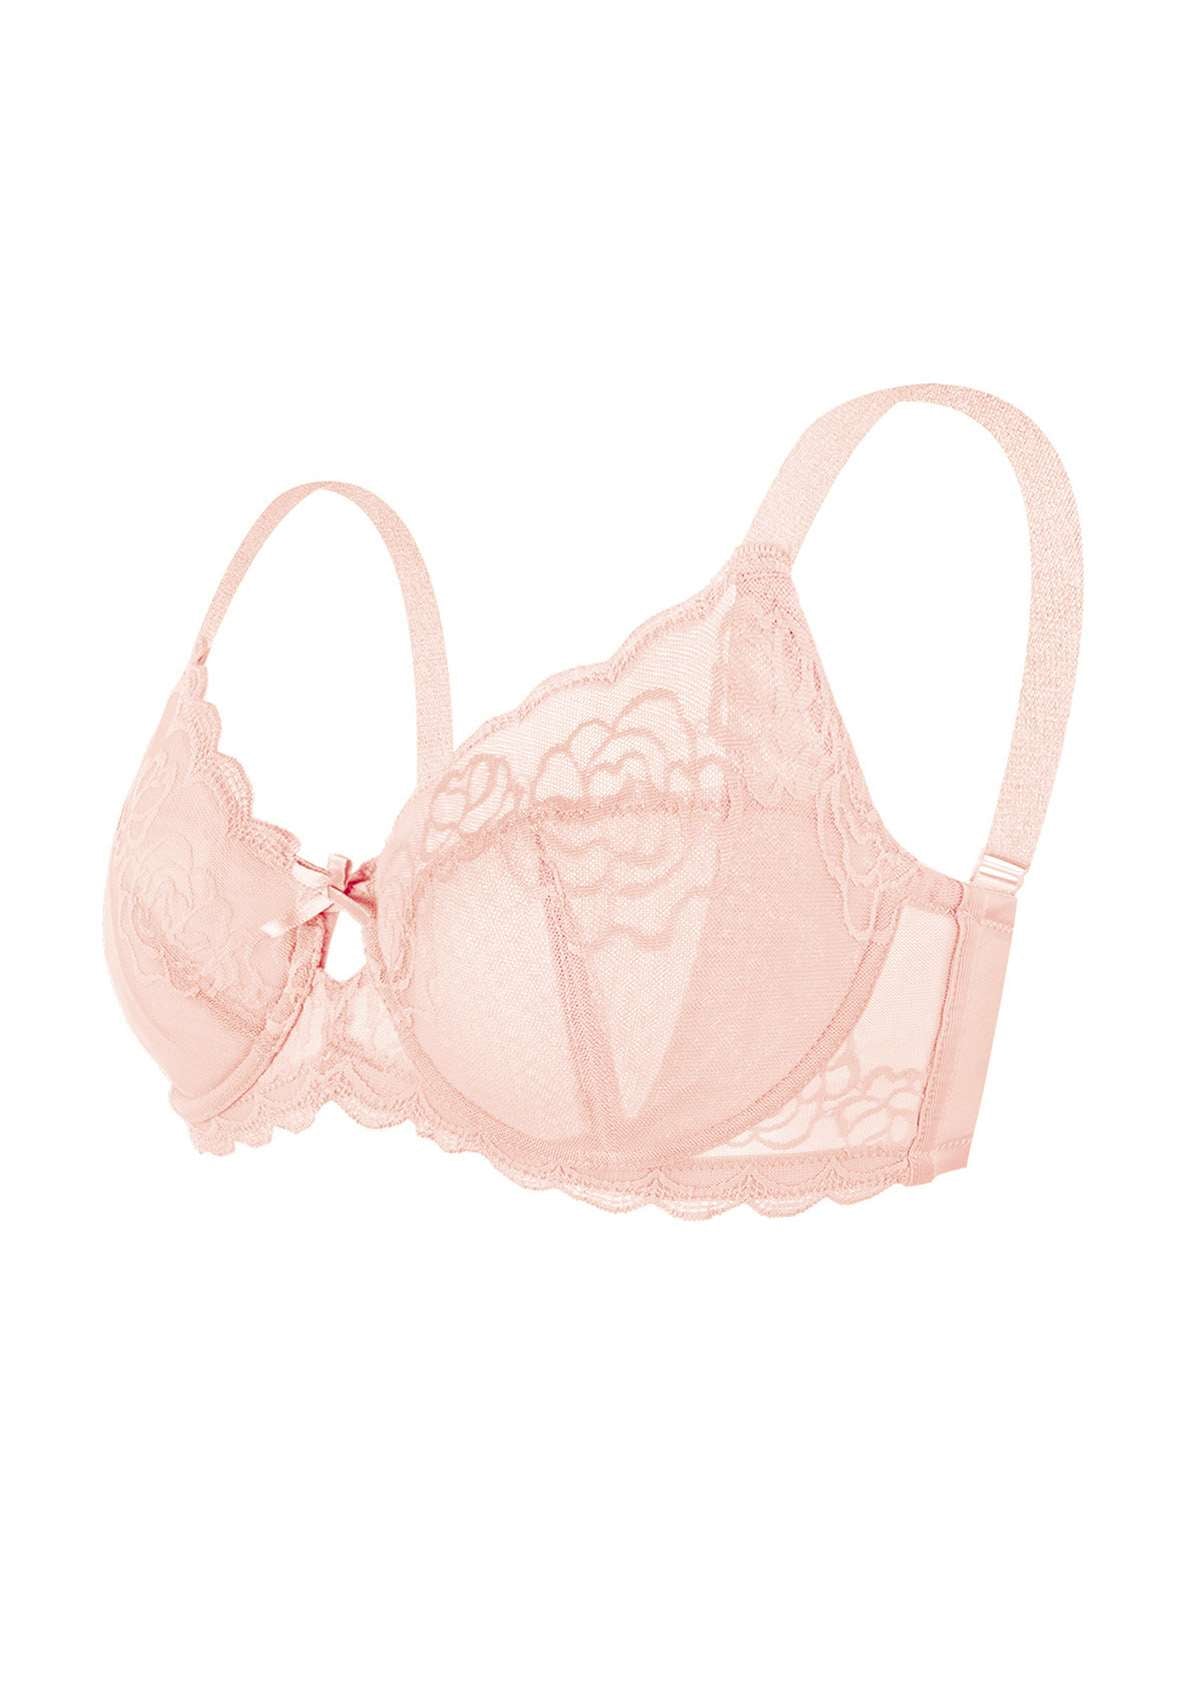 HSIA Rosa Bonica Sheer Lace Mesh Unlined Thin Comfy Woman Bra - Pink / 42 / DD/E